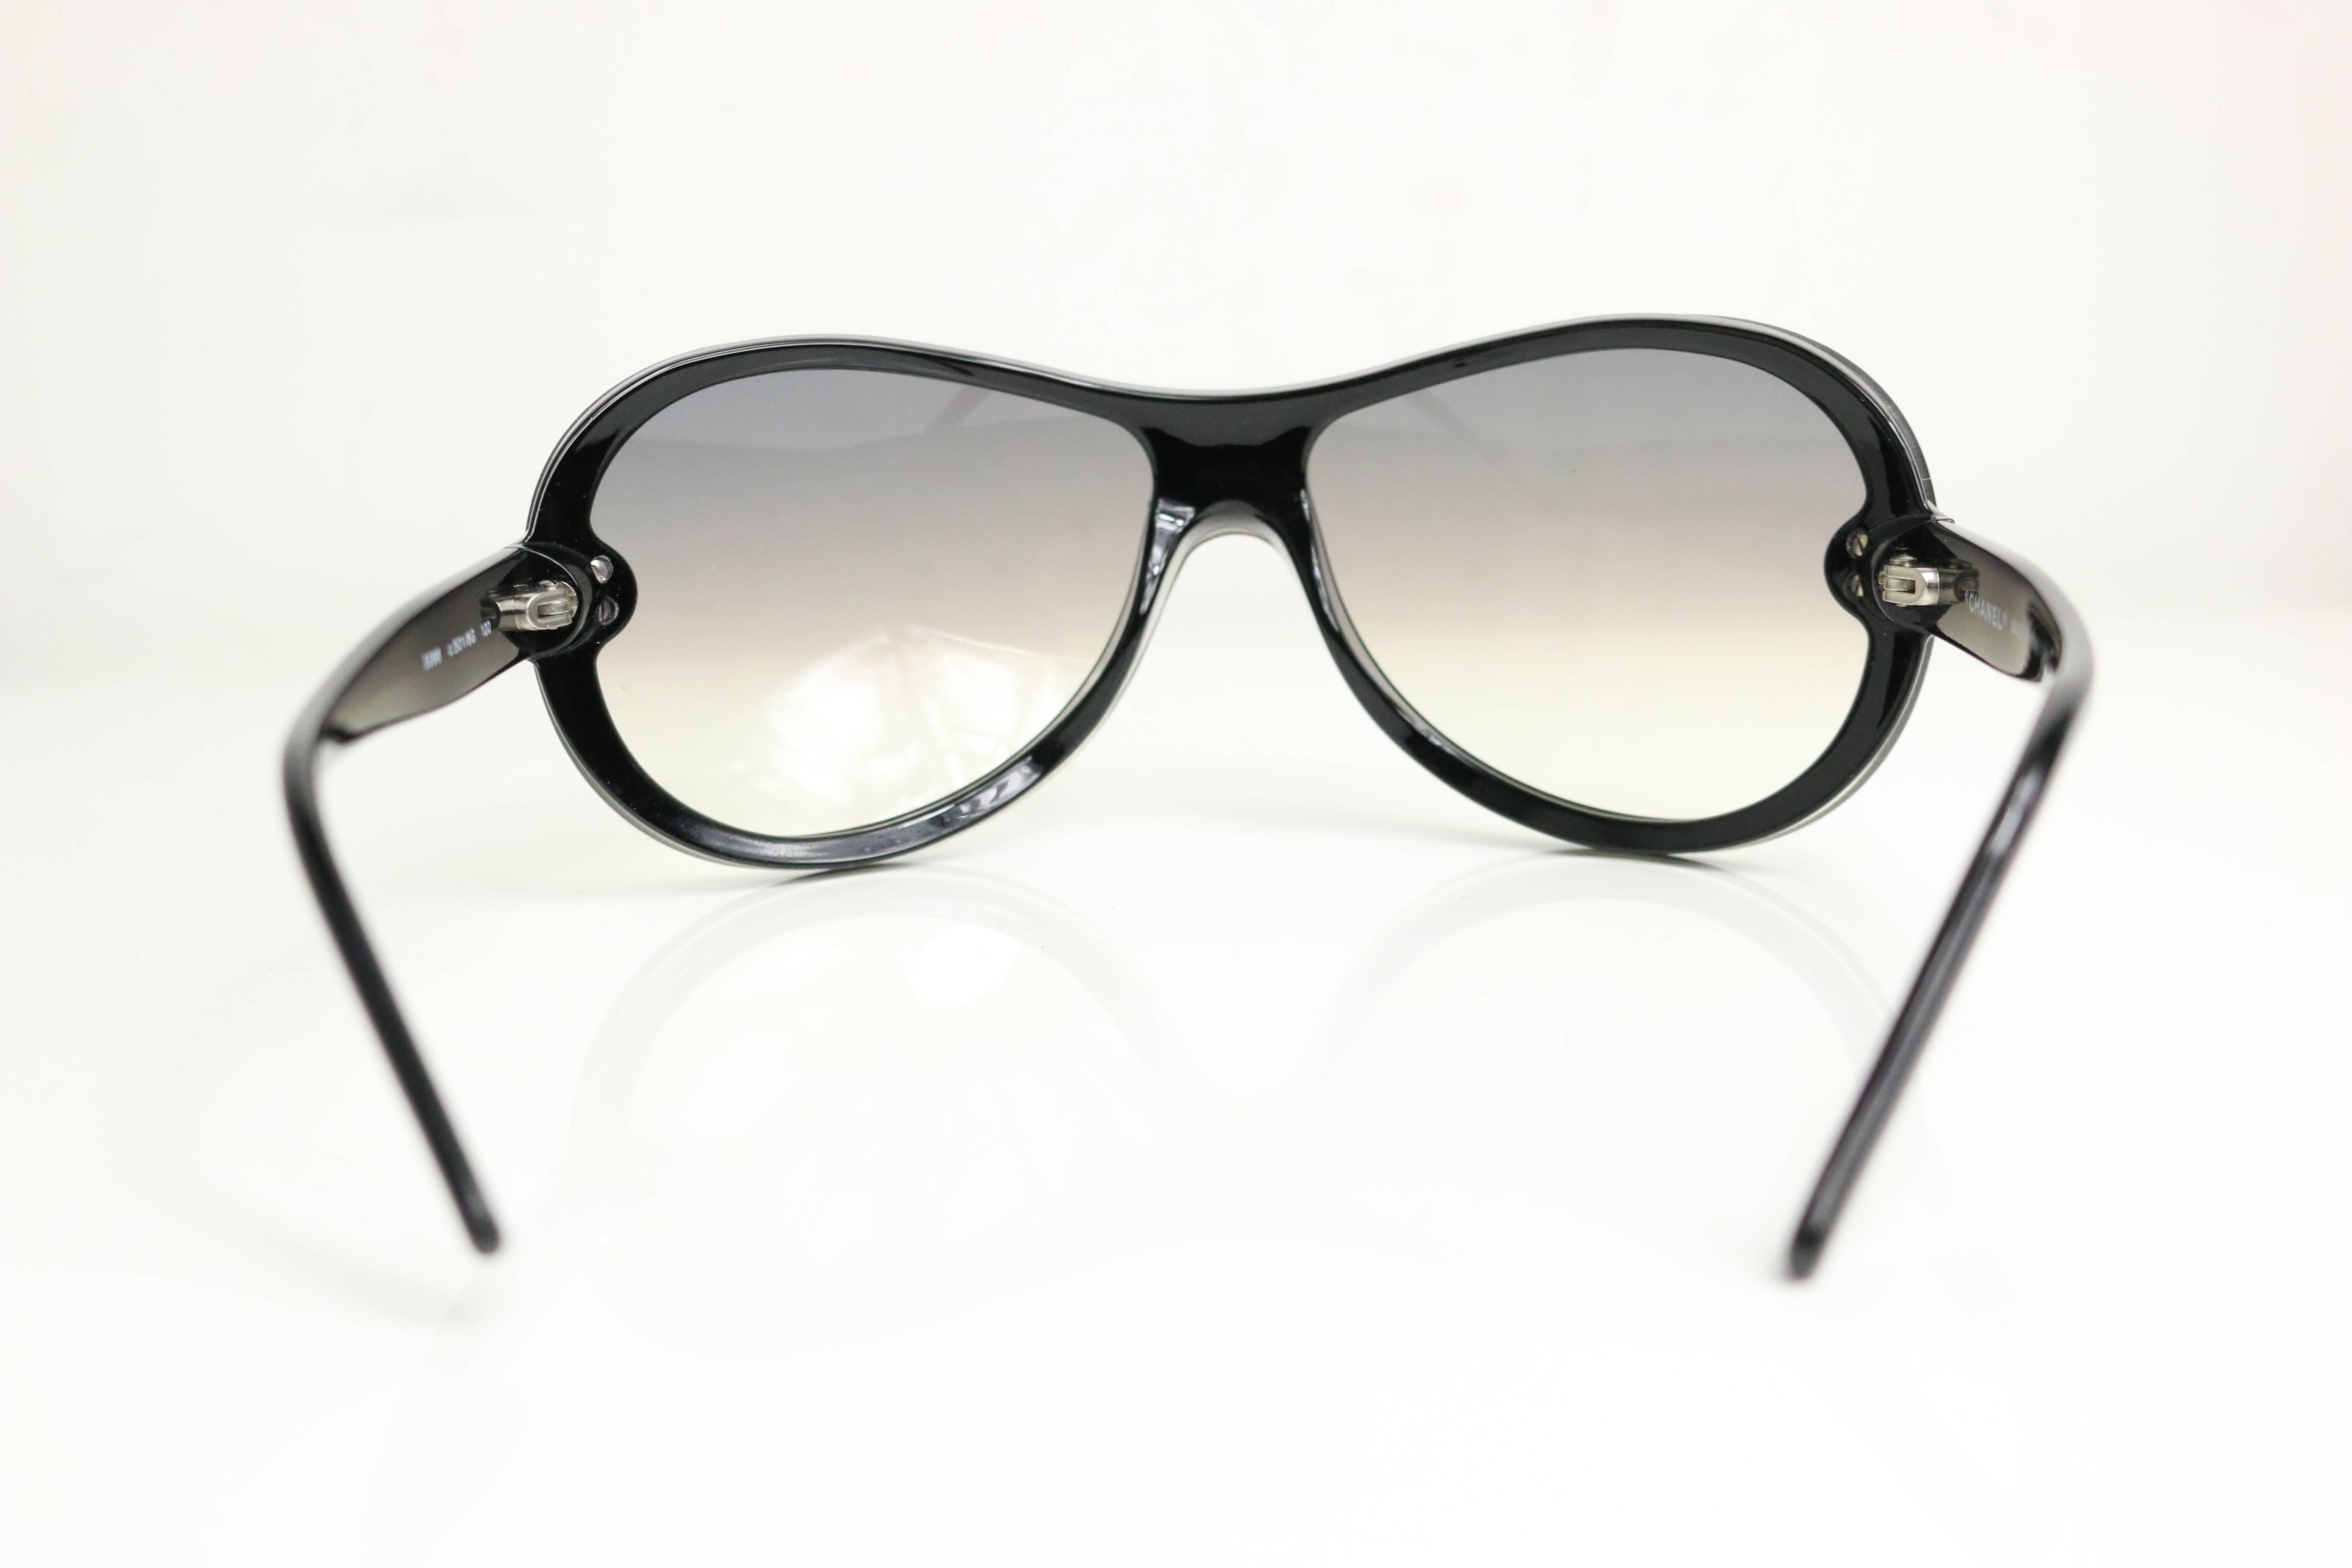 - Chanel black plastic frames and grey lenses aviator sunglasses. 

- Model no: 5066 C501/8G 120. 

